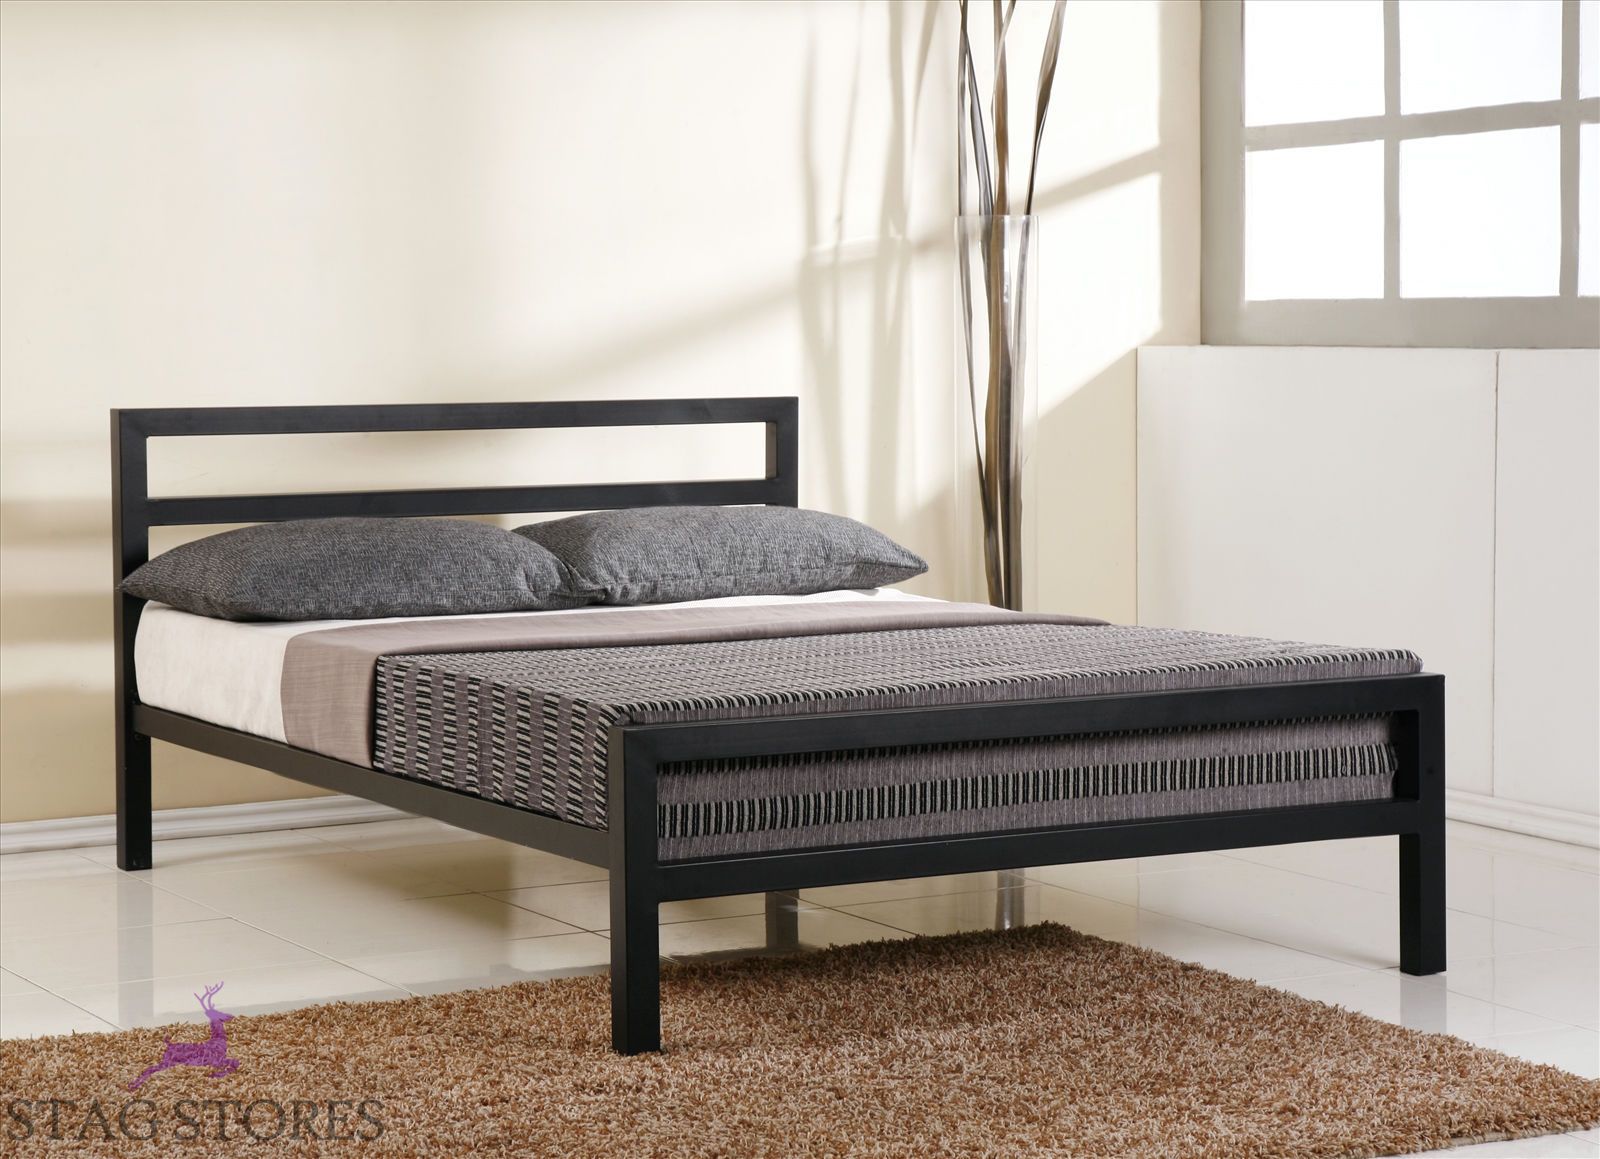 Unique and Strong Iron Platform Bed for Modern Bedroom - Unique and Strong Iron Platform Bed for Modern Bedroom -   17 diy Bed Frame black ideas